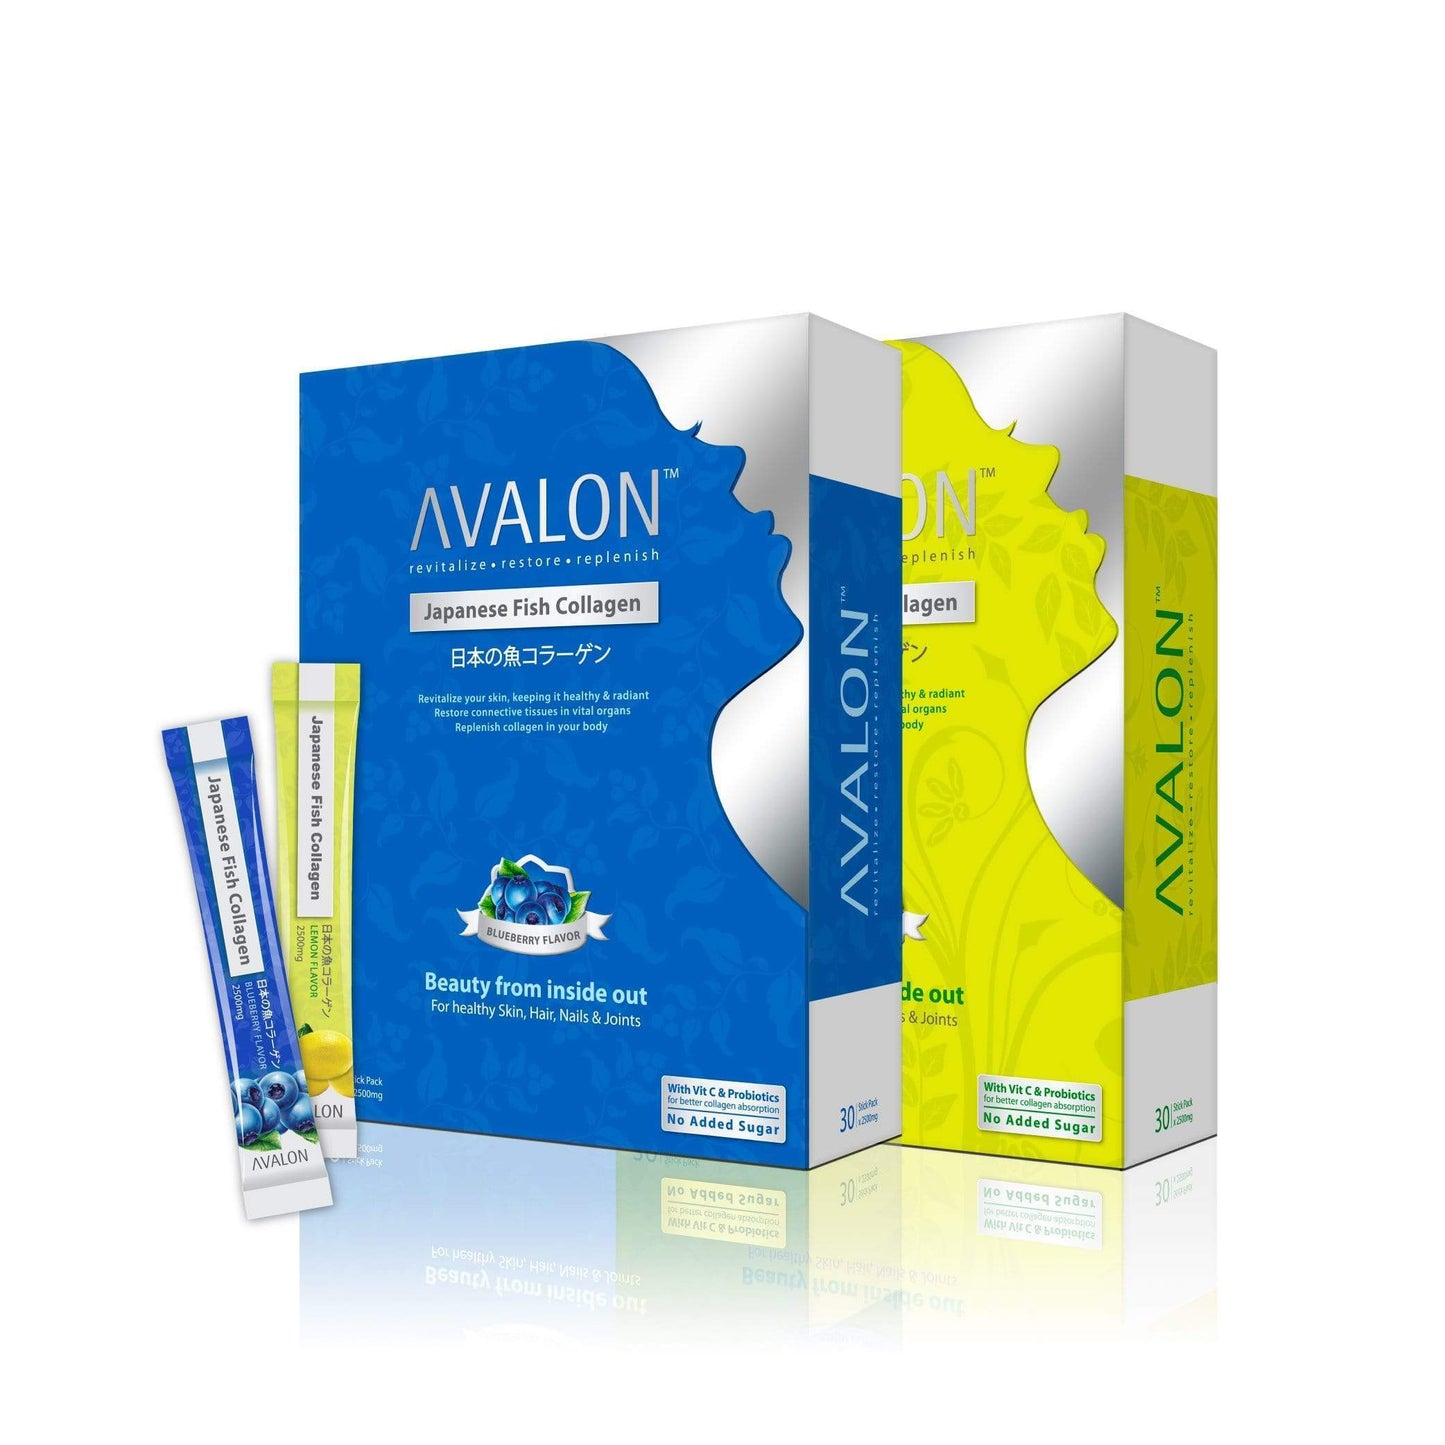 Avalon Japanese Fish Collagen - Avalon Health & Beauty